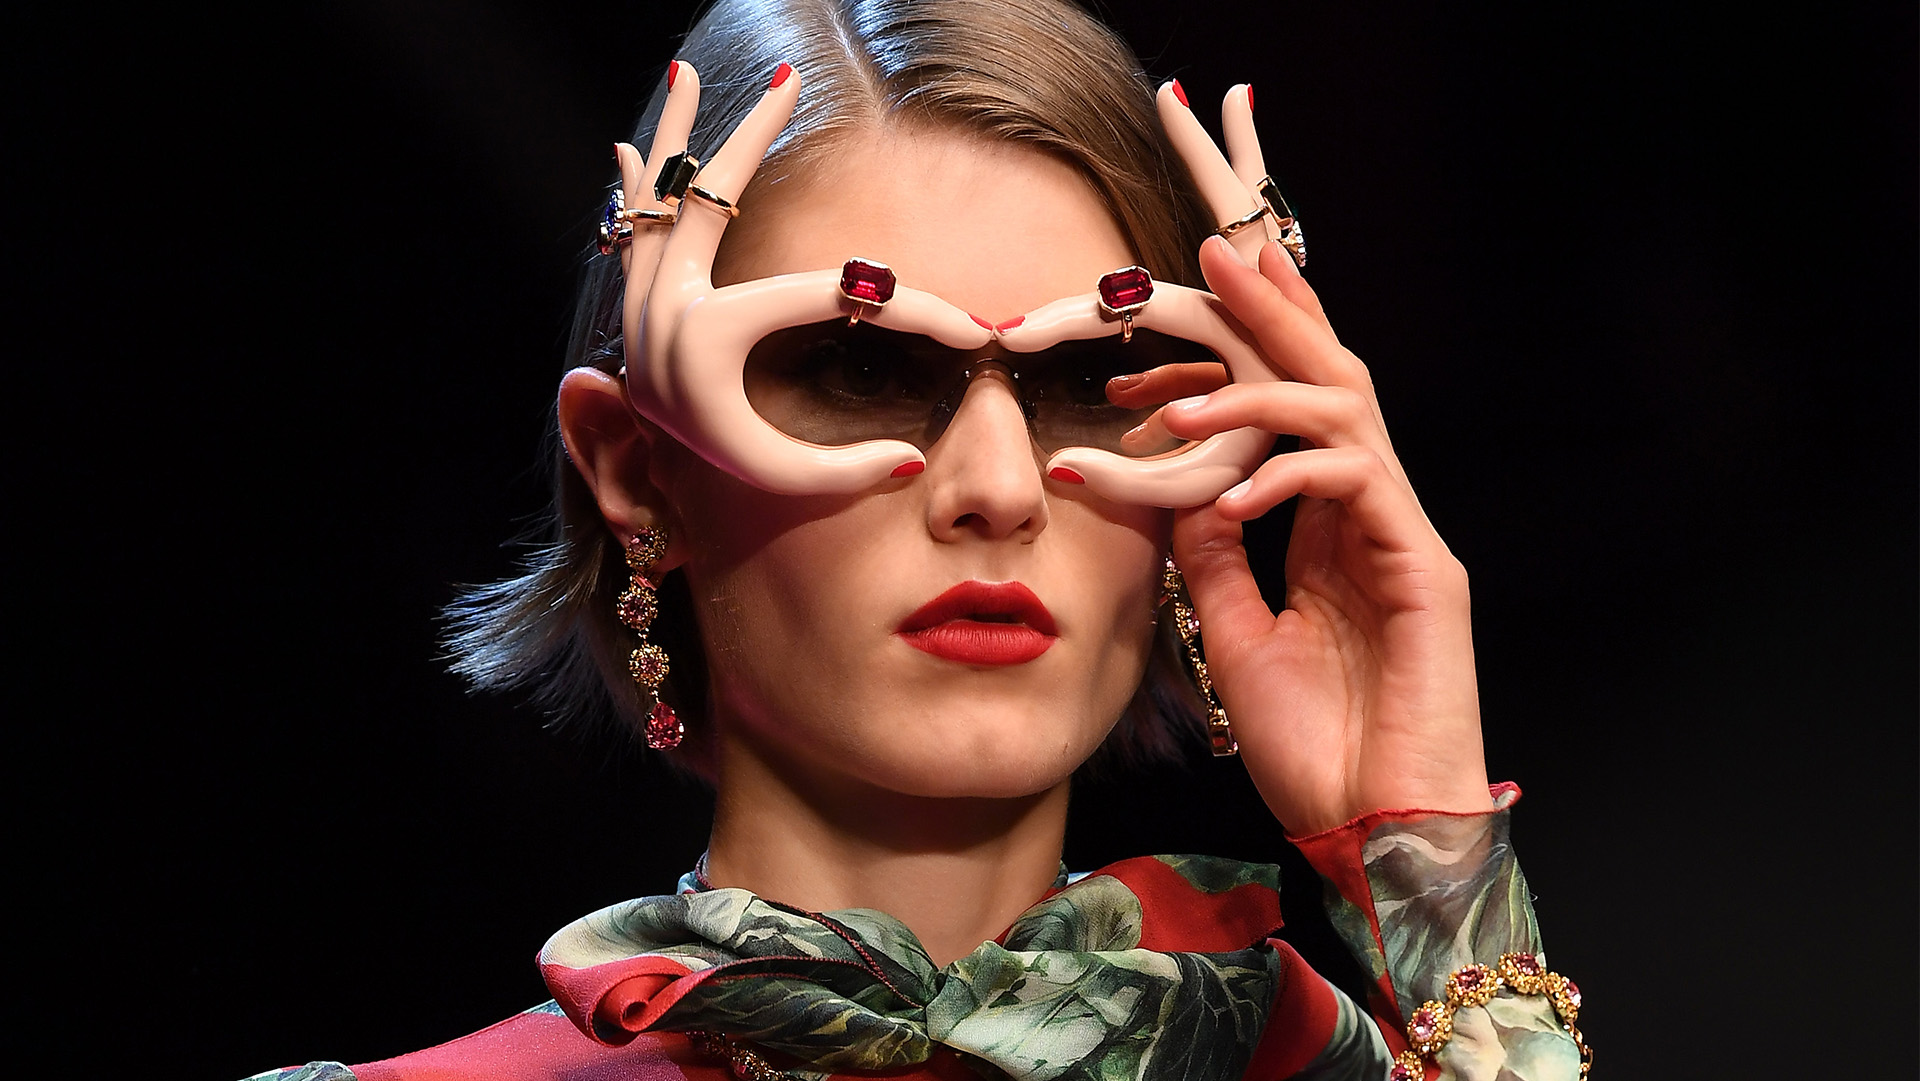 Milan Fashion Week accessory trends